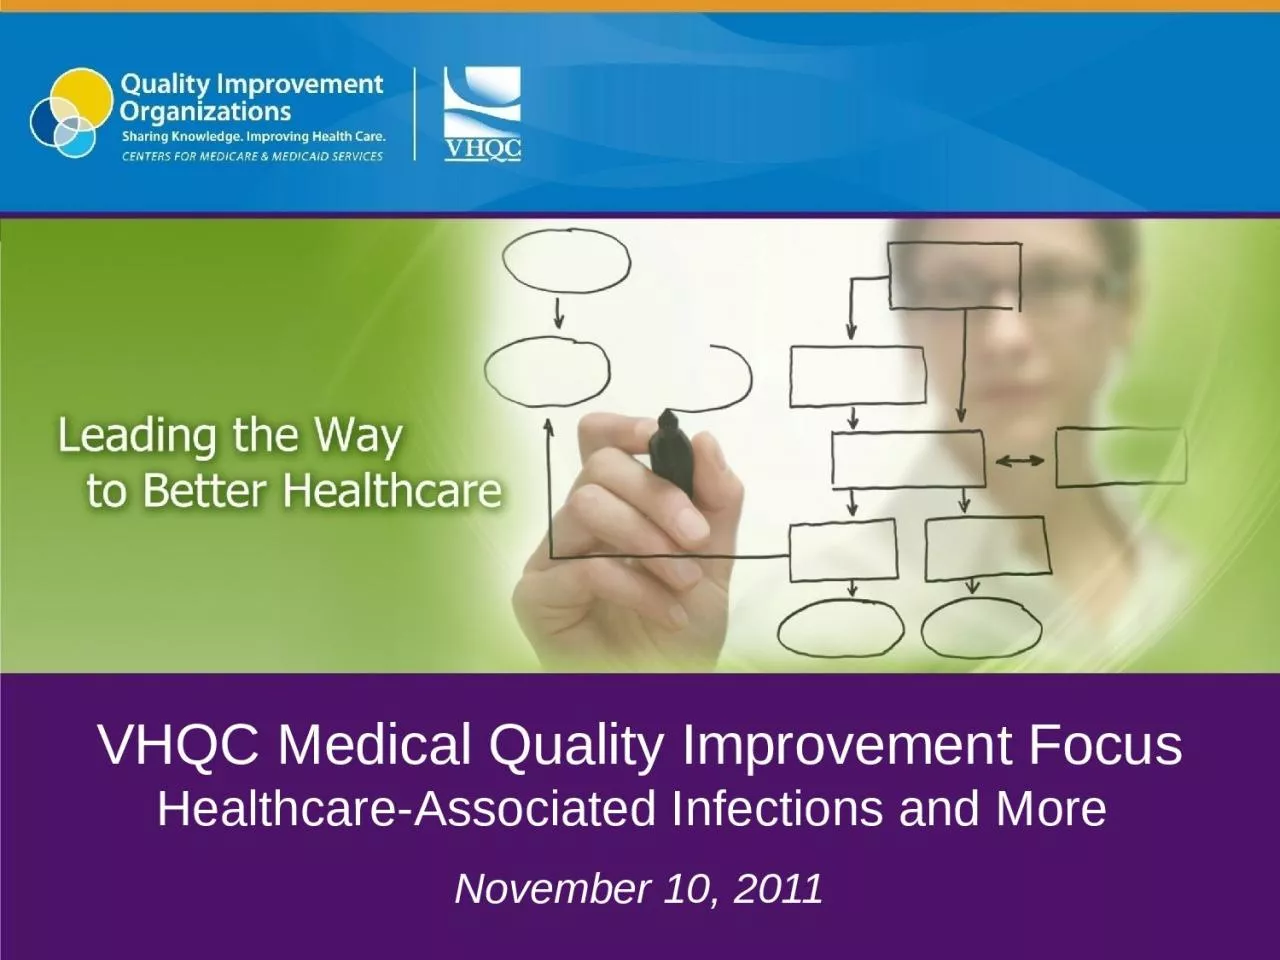 VHQC Medical Quality Improvement Focus